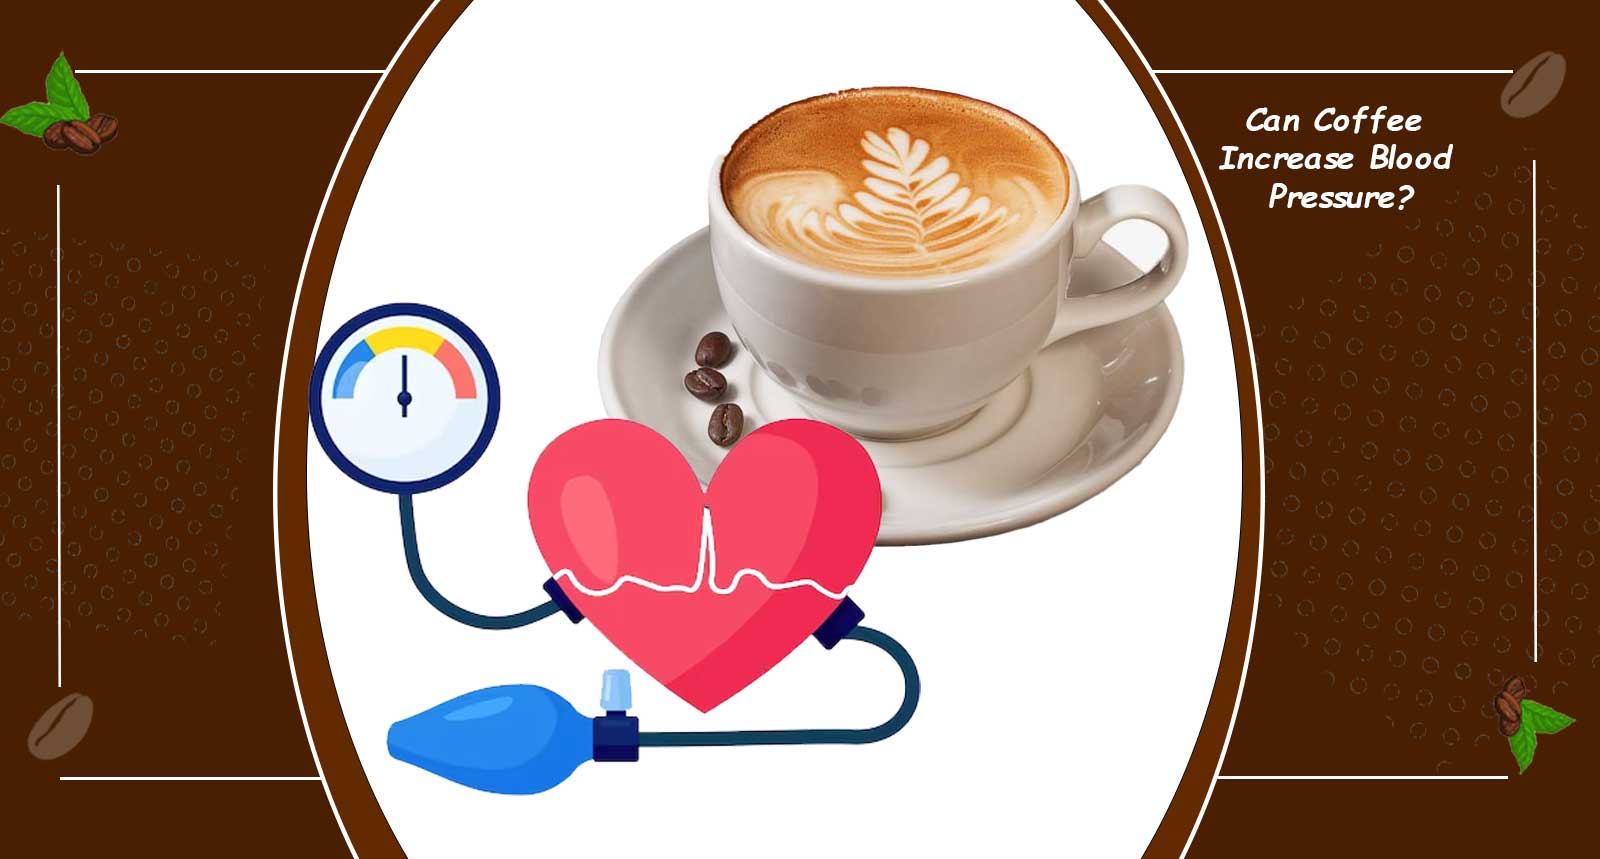 can coffee increase blood pressure?